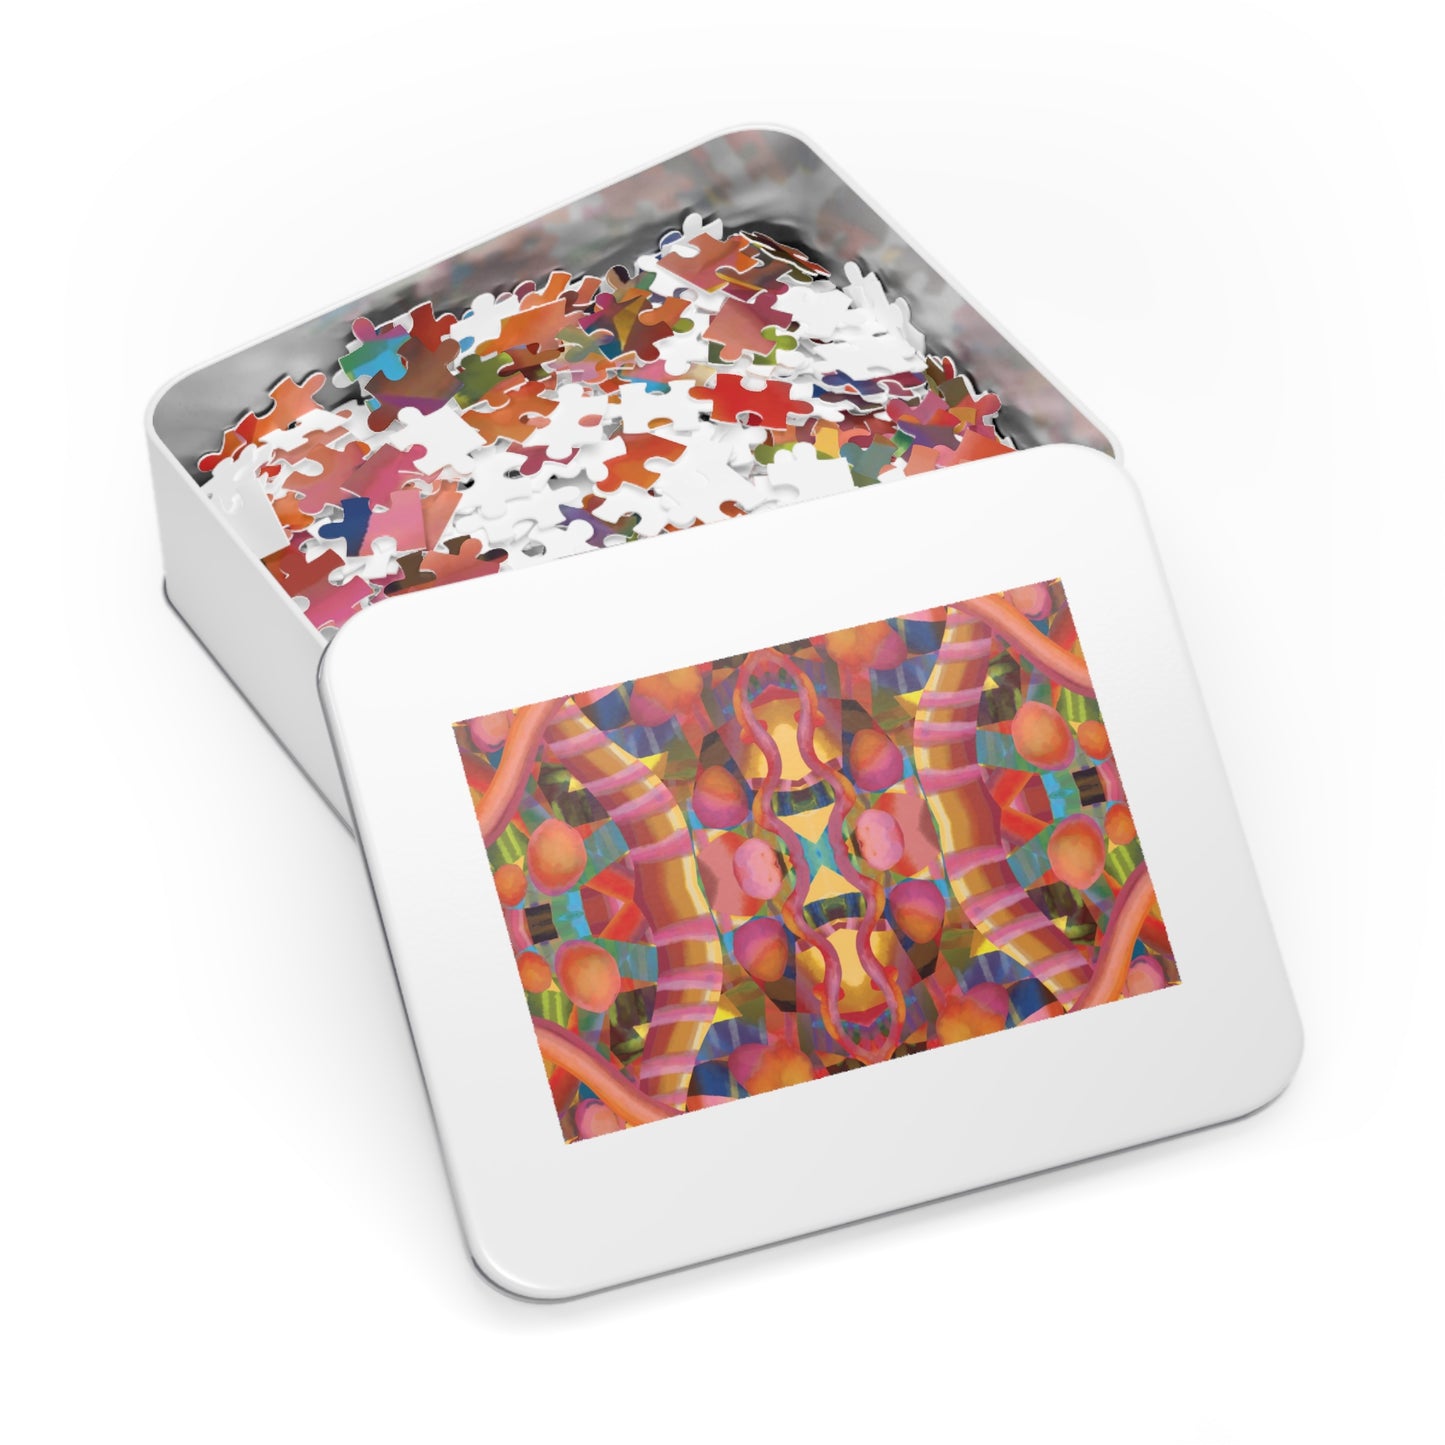 Colorful Fibers Jigsaw Puzzle (1000-Piece) by Artist Leah Quinn